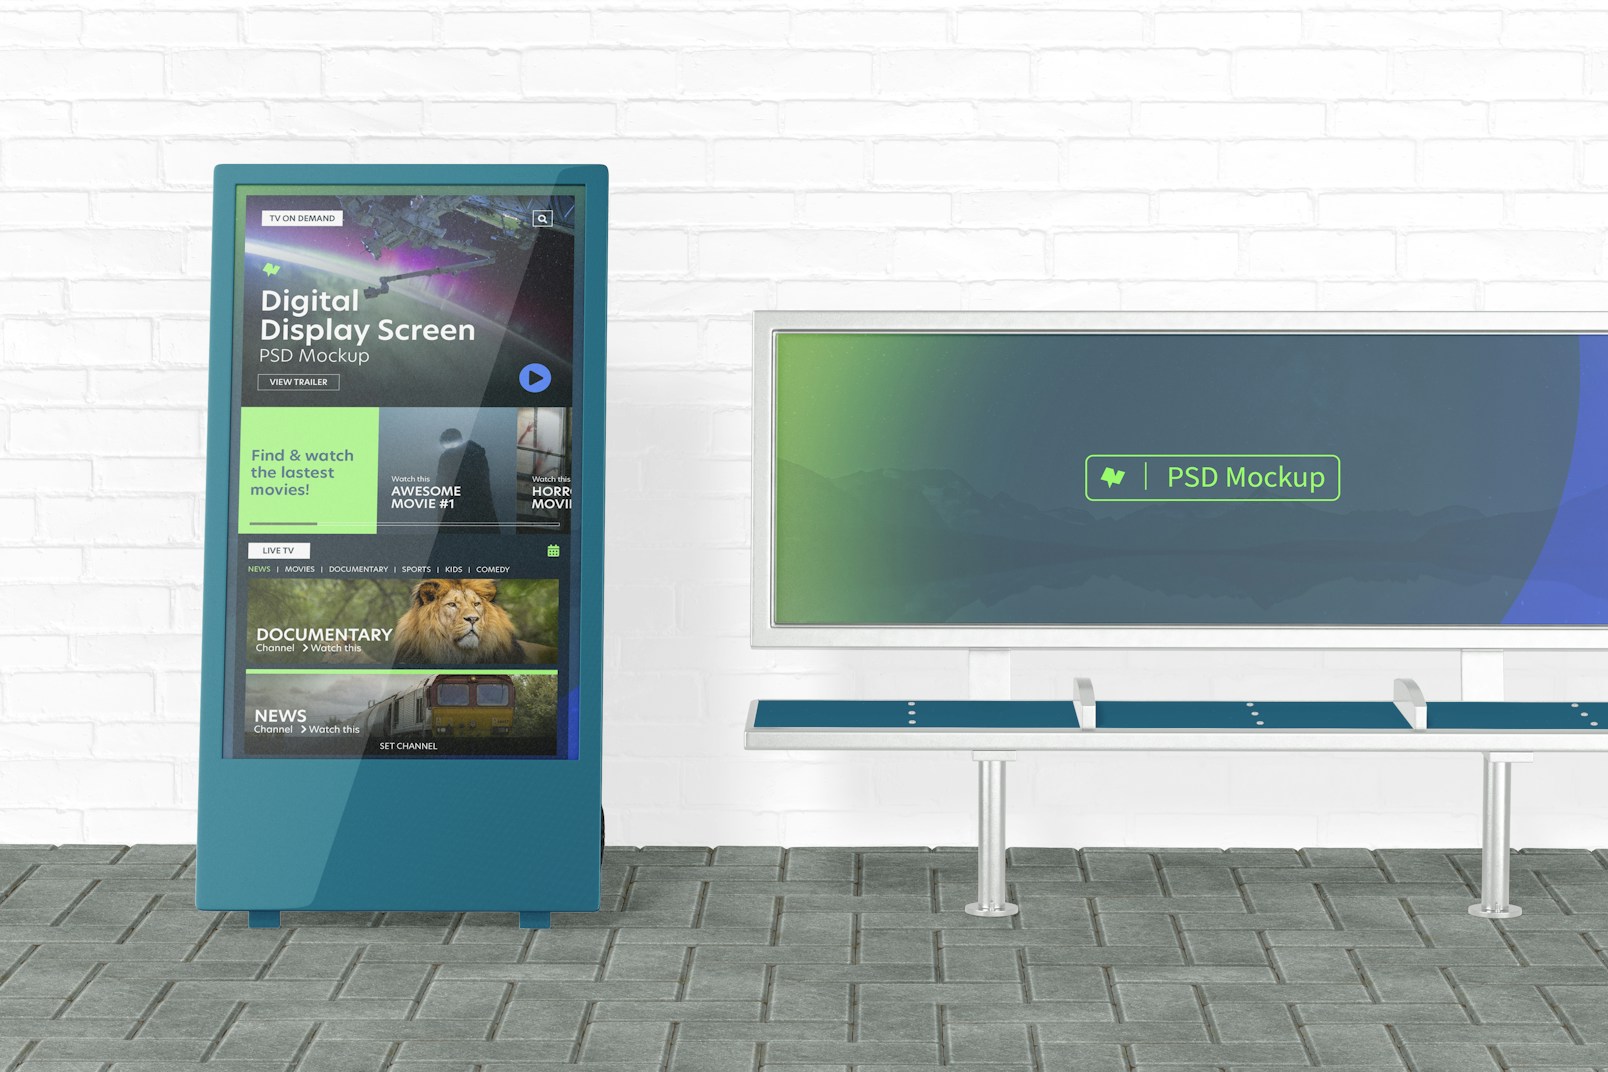 Digital Display Screen with Advertising Bench Mockup